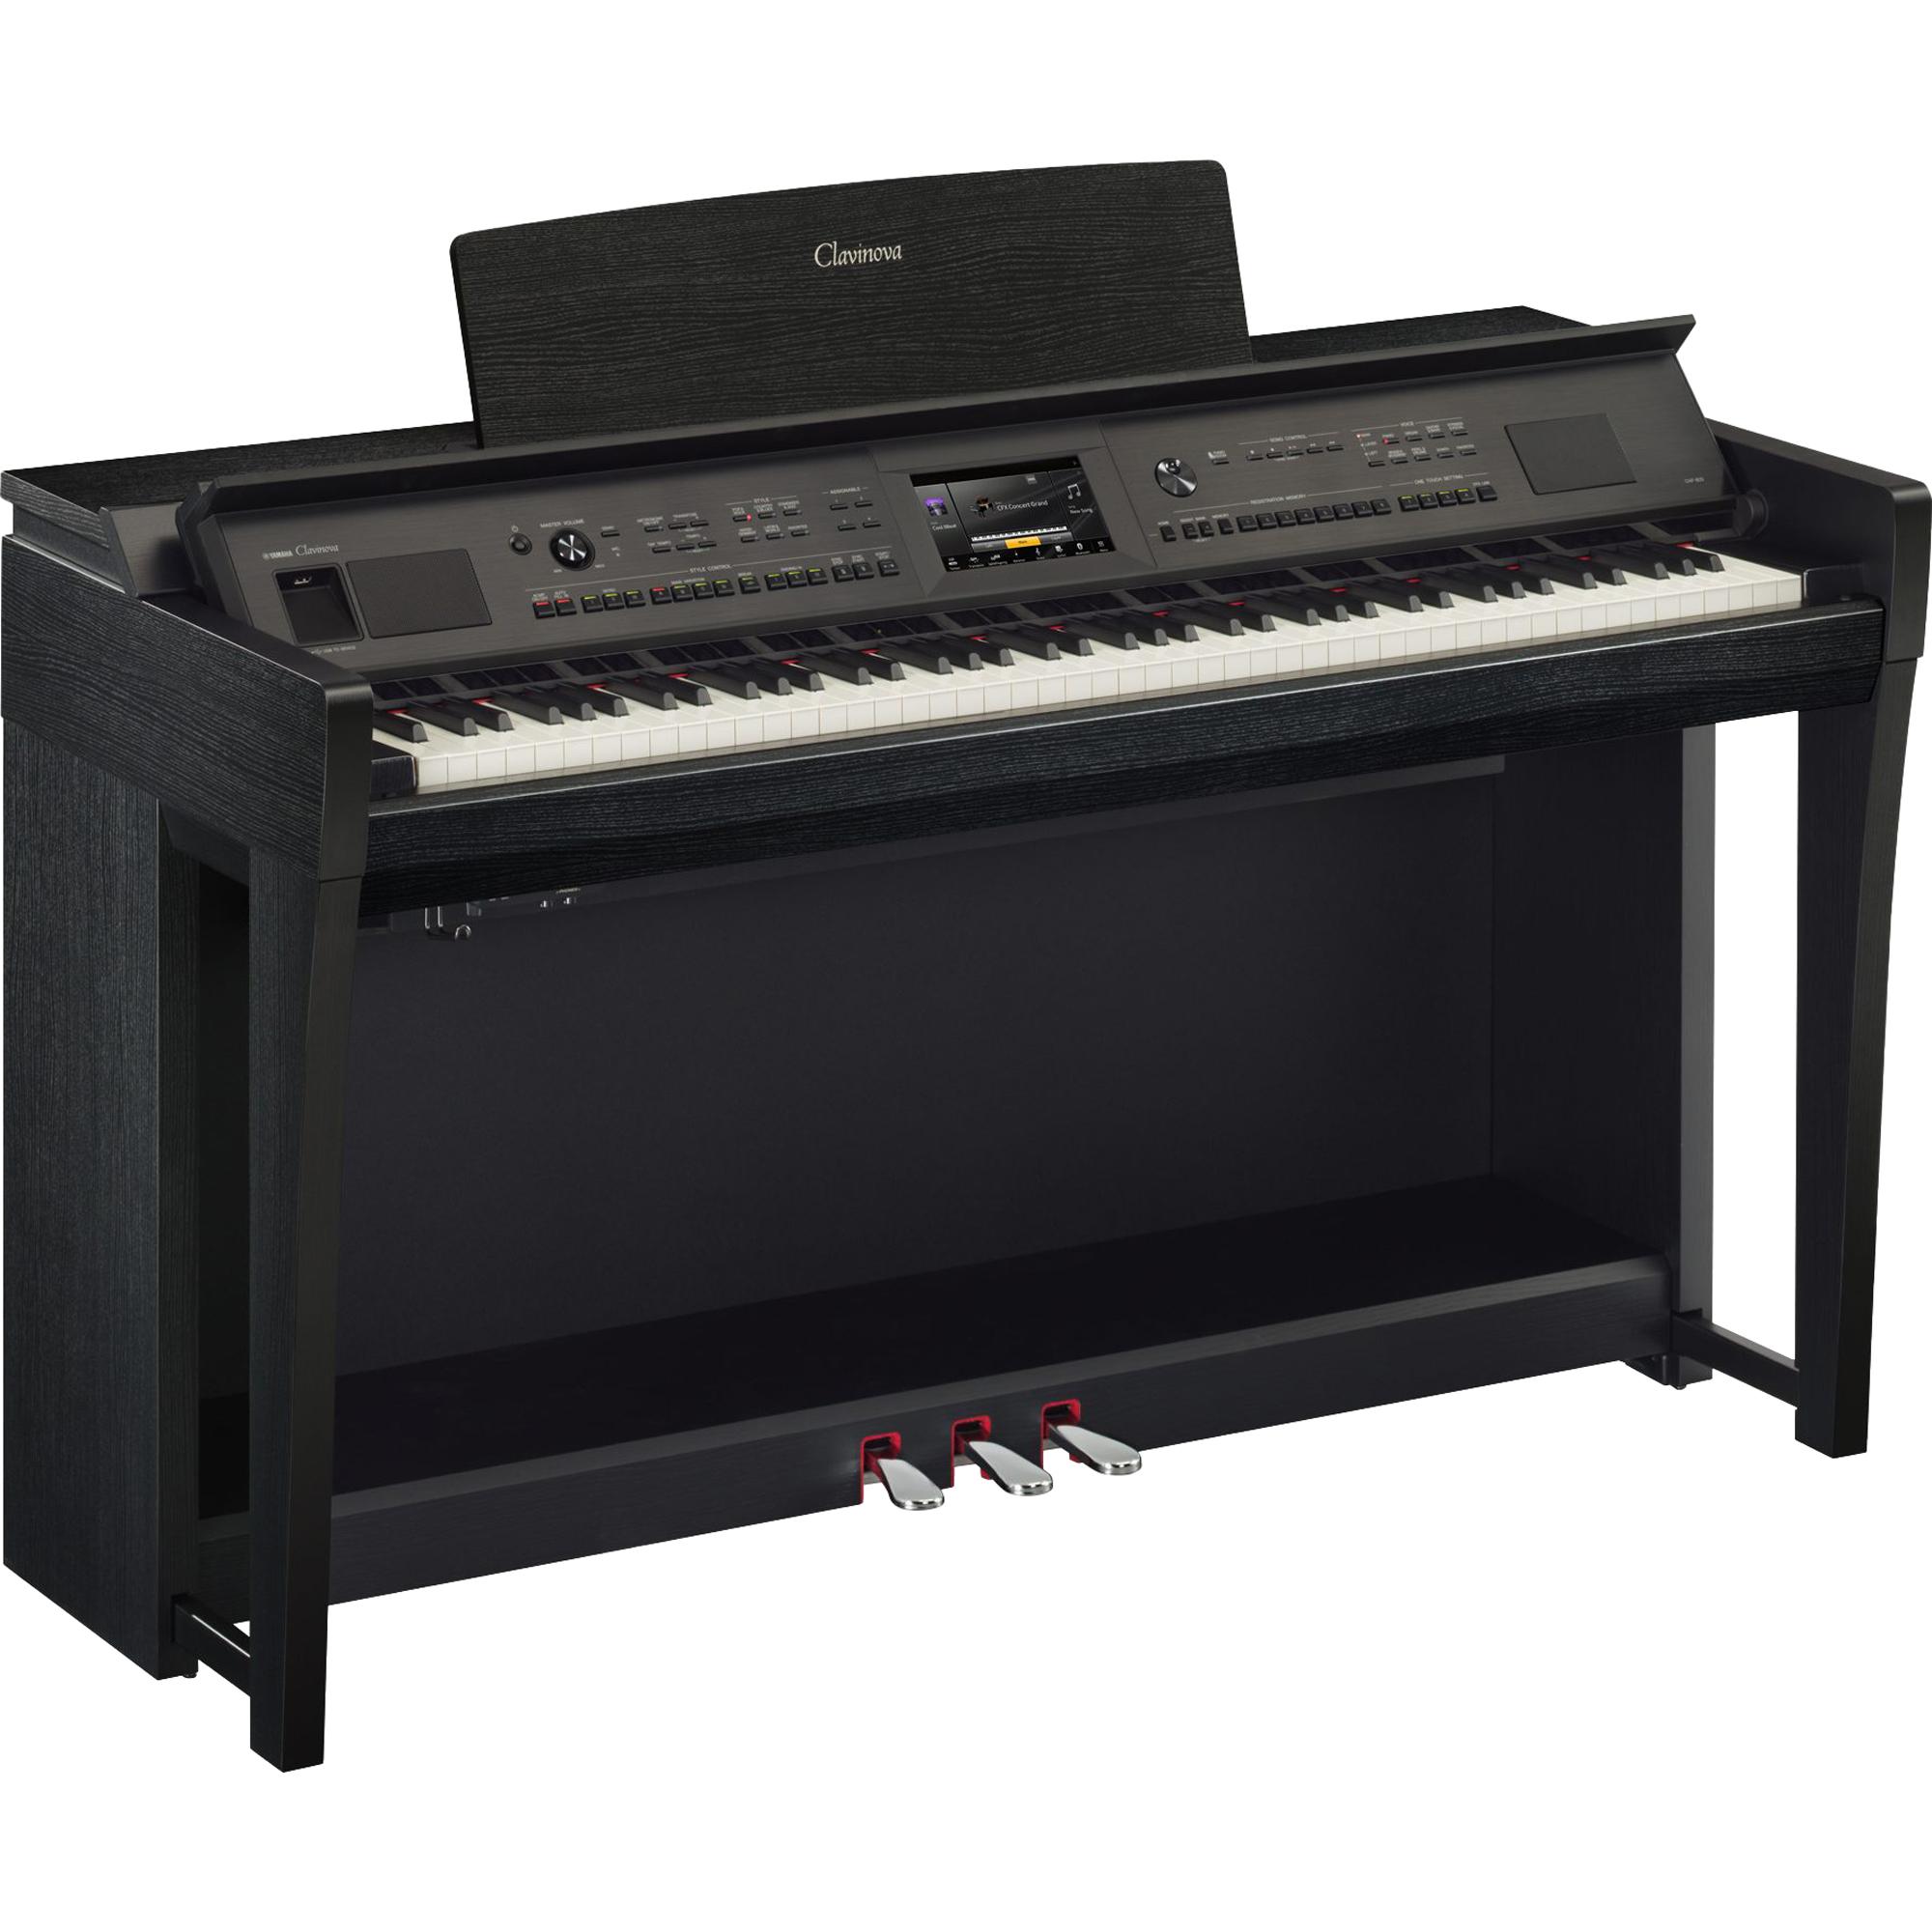 Piano Digital Yamaha CVP805 Preto